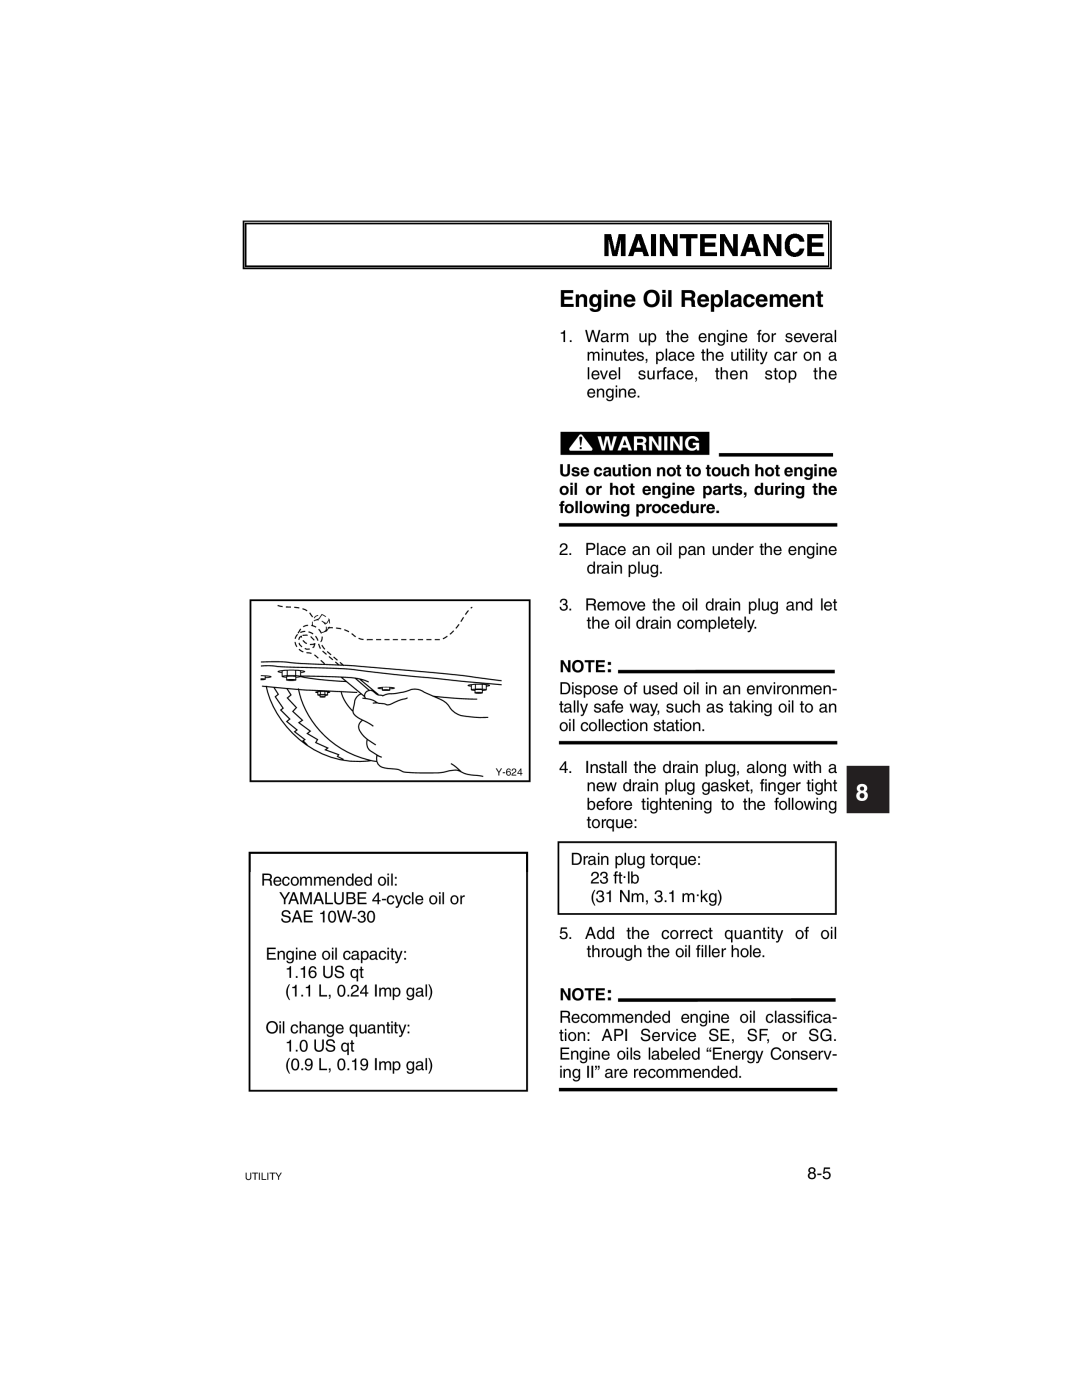 Yamaha G21A manual Maintenance, Engine Oil Replacement, 1 2 3 4 5 6 